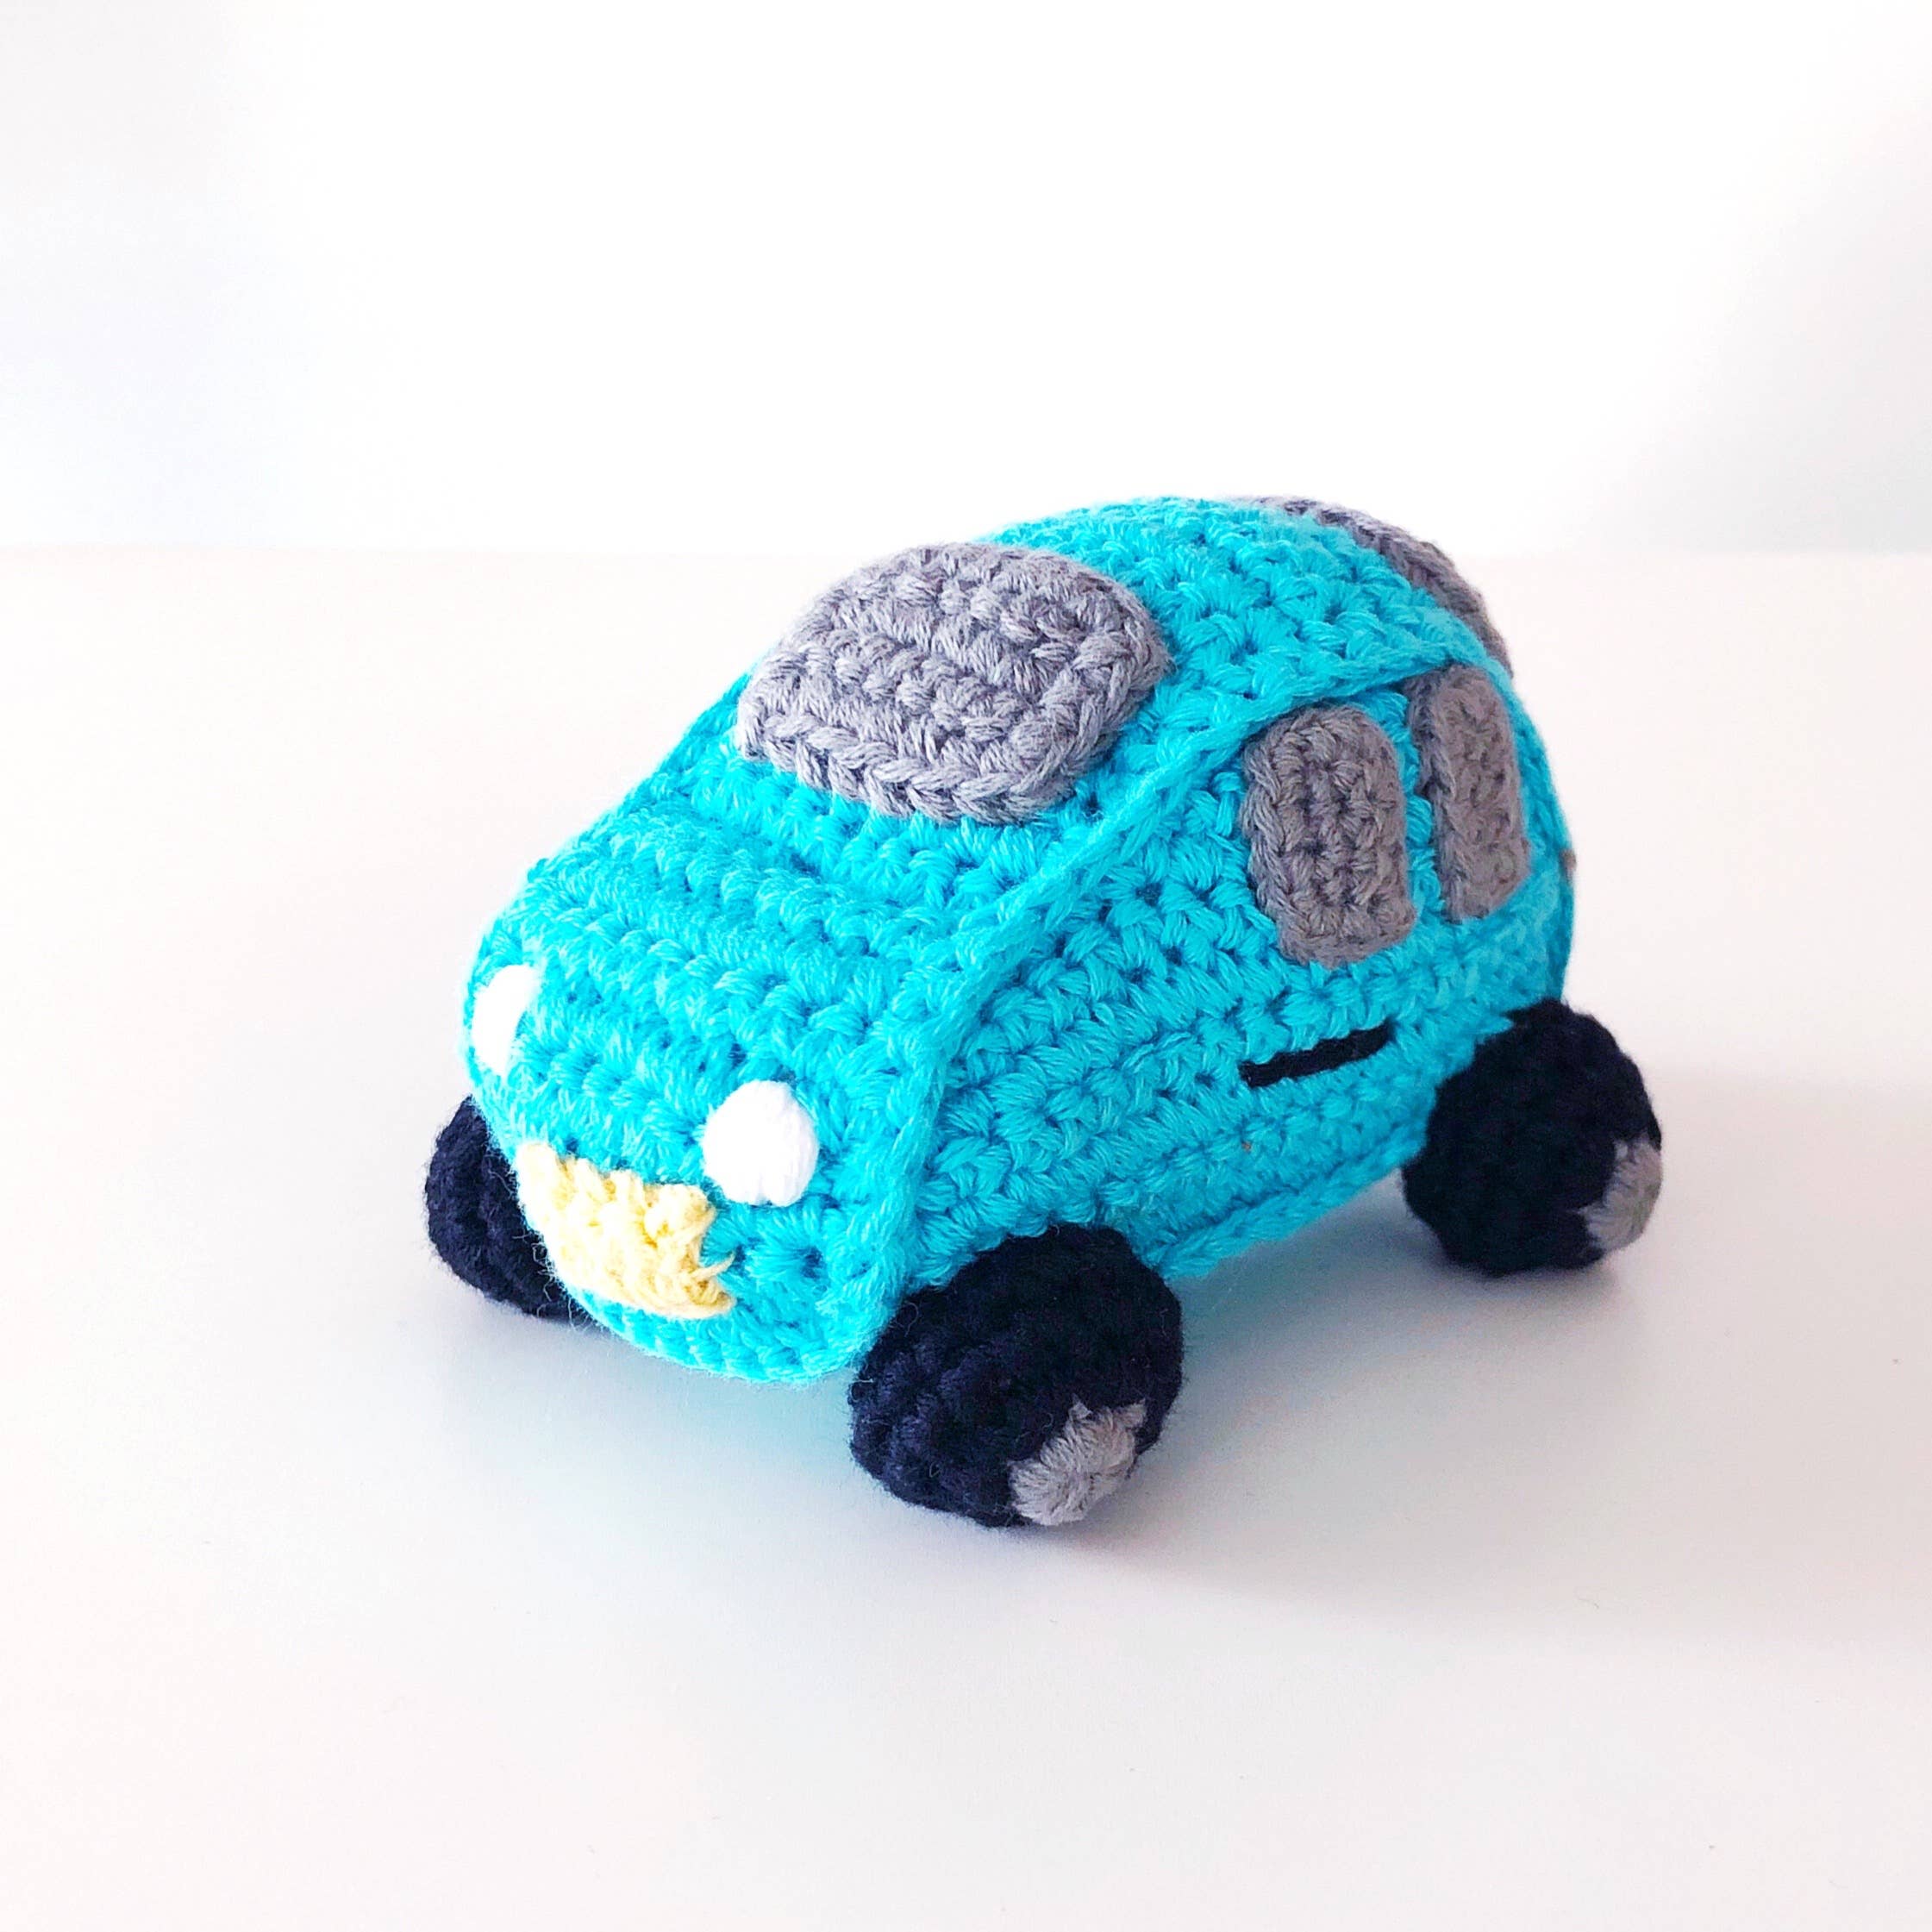 Pebble Organic Plush Toy Car Rattle